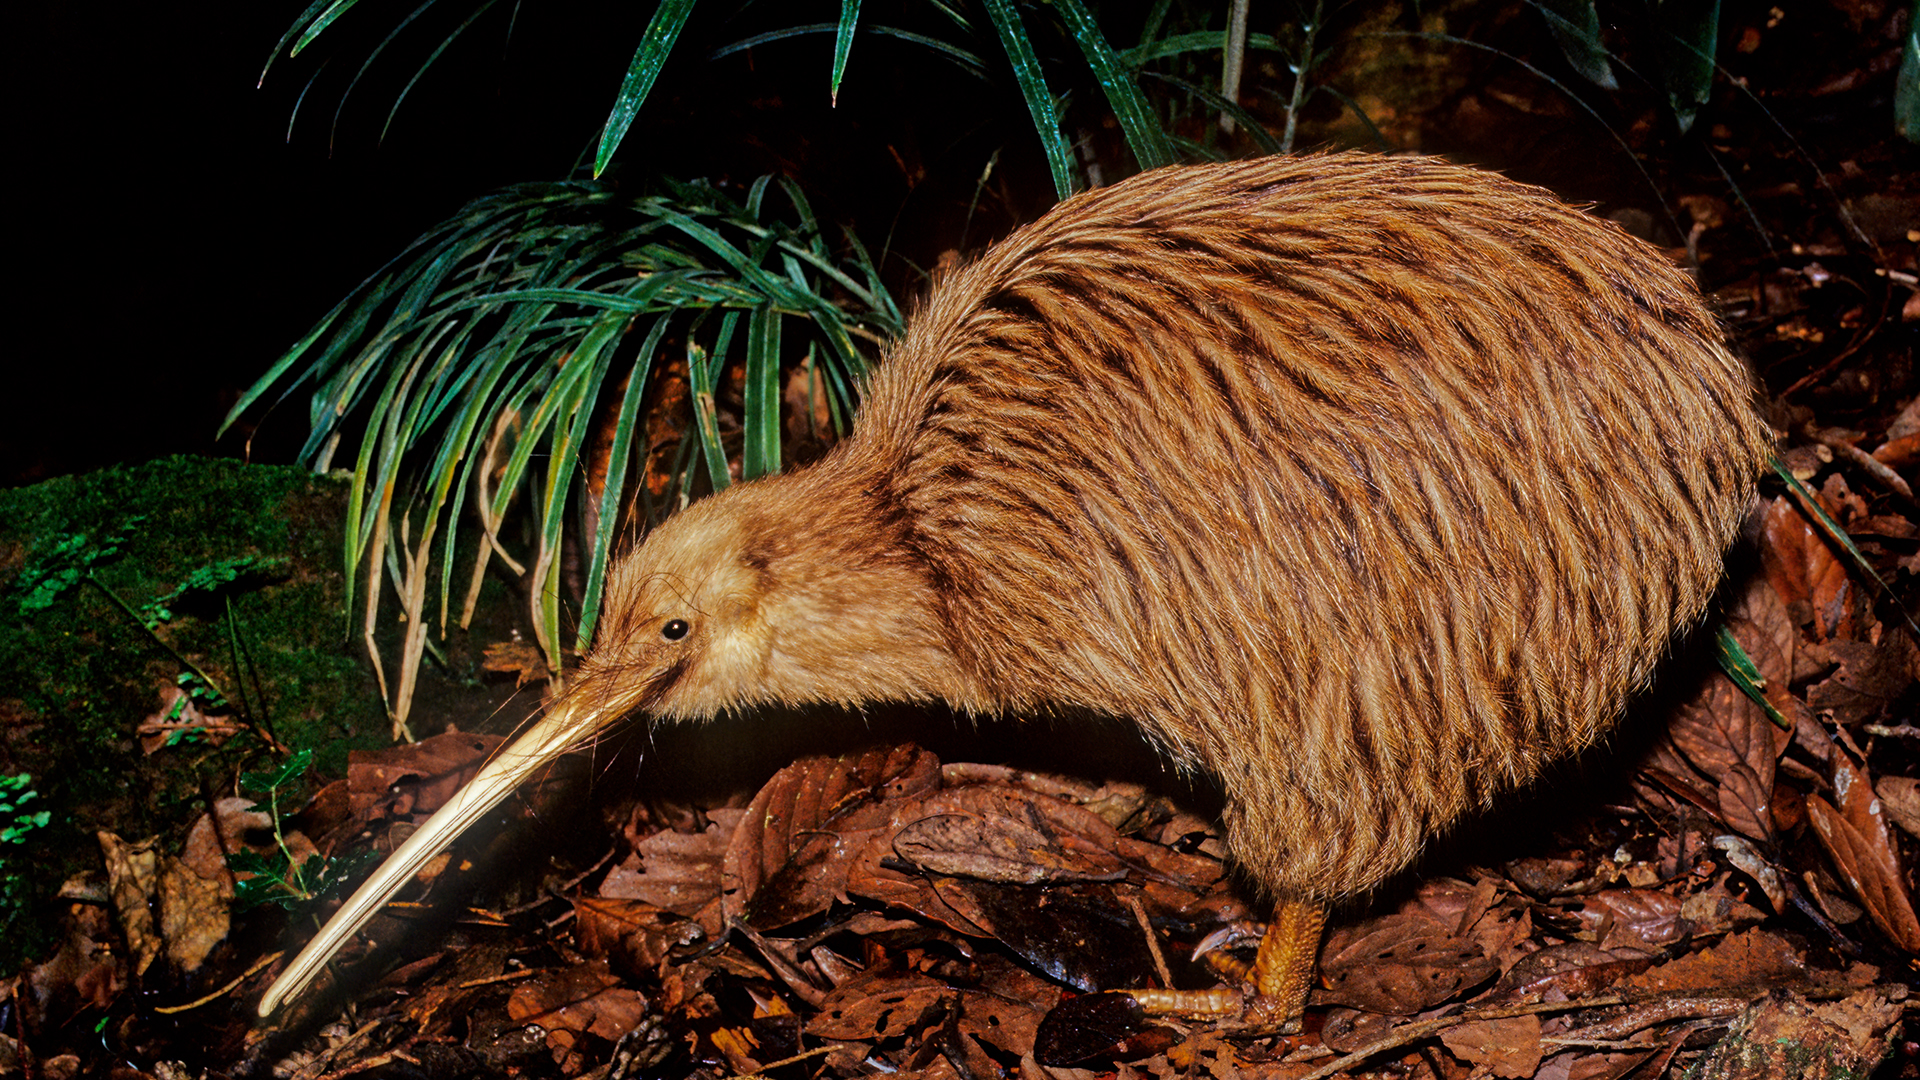 A Kiwi in New Zealand.